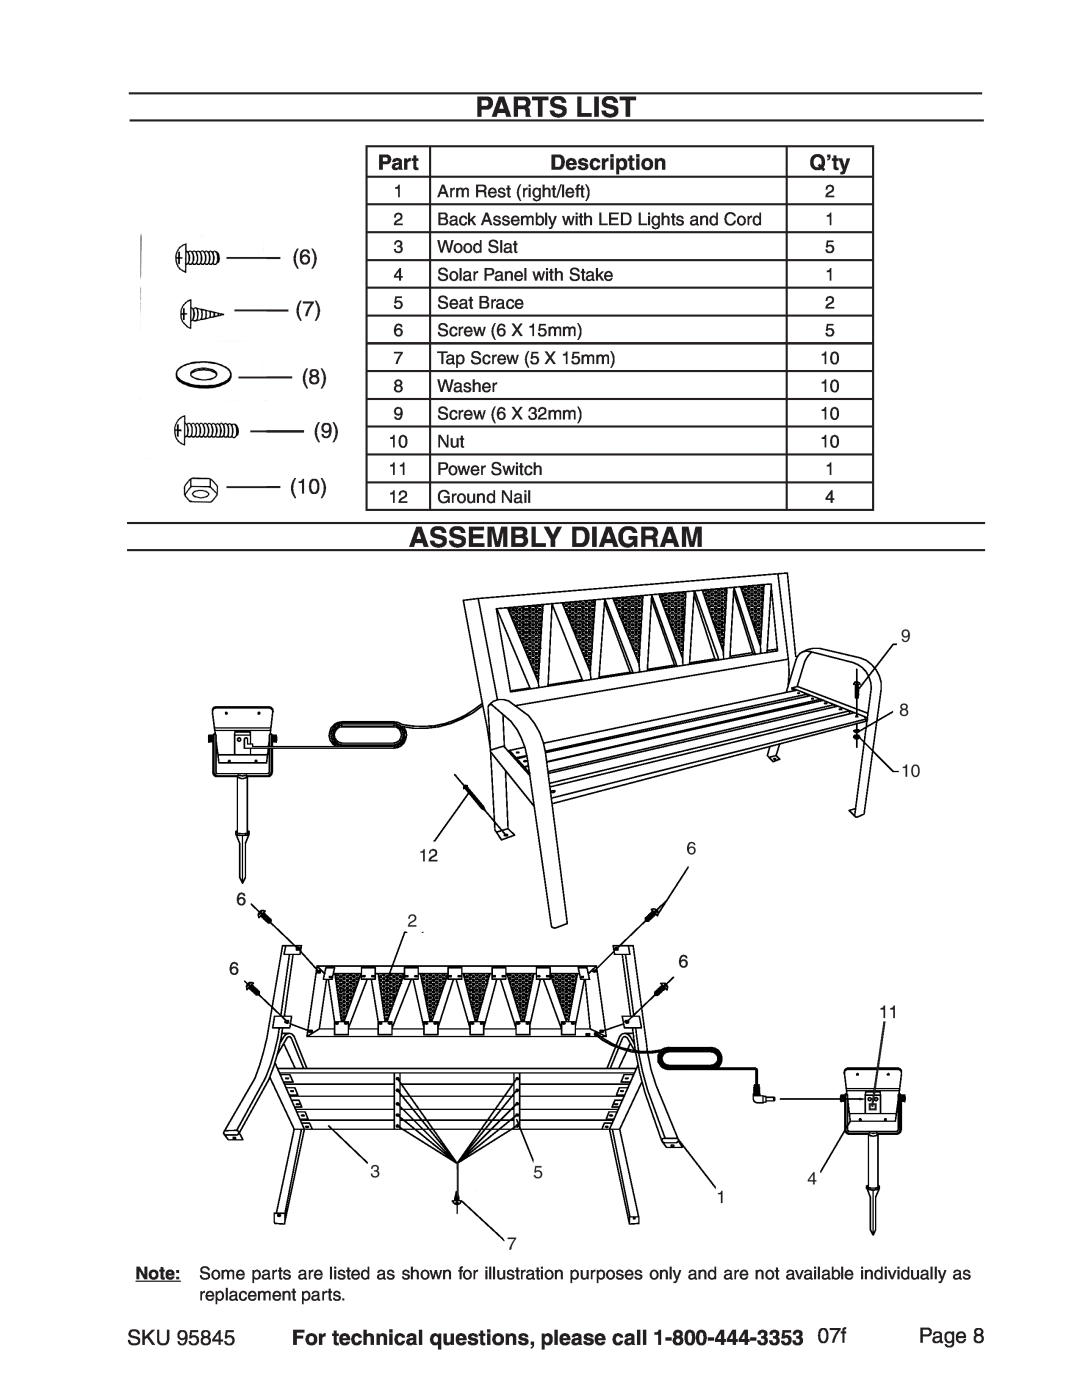 Harbor Freight Tools 95845 manual Parts List, Assembly Diagram, Description, Q’ty, Page 